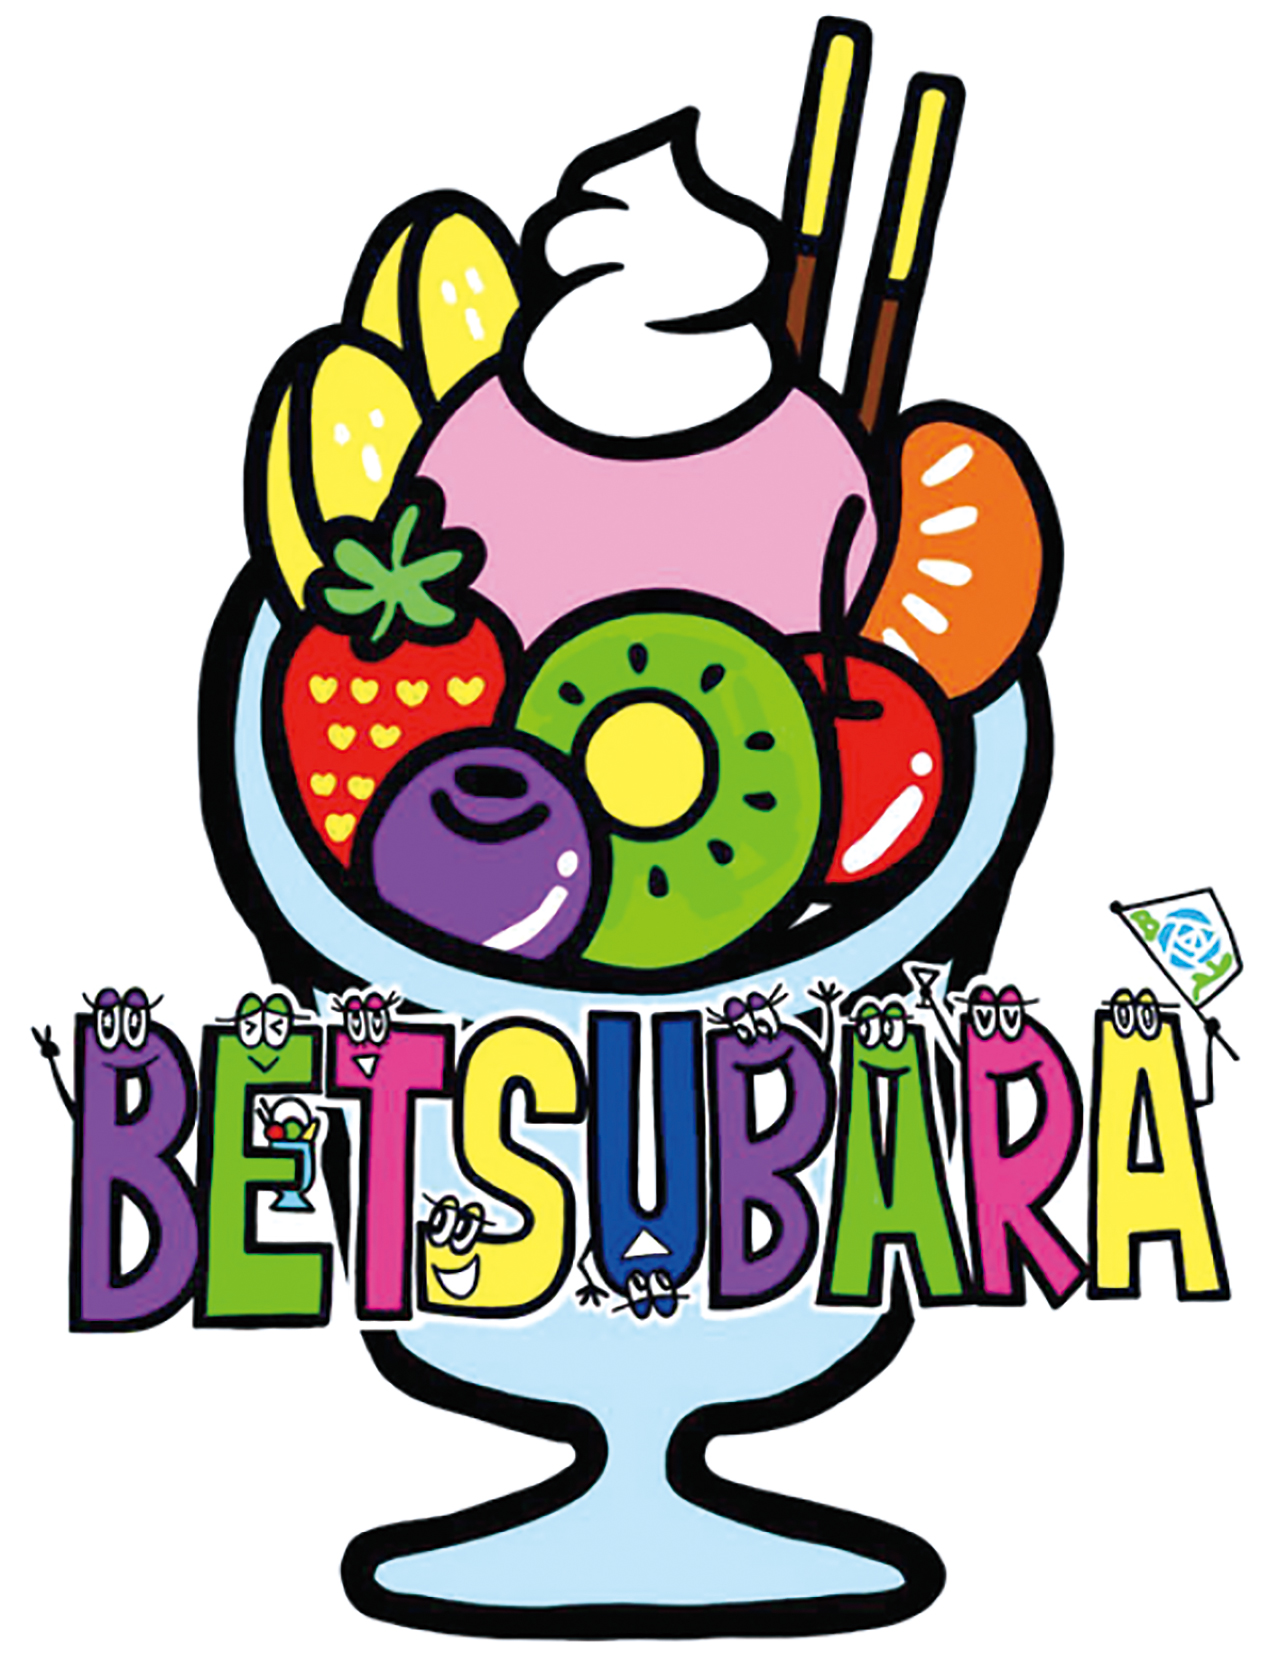 betsubara